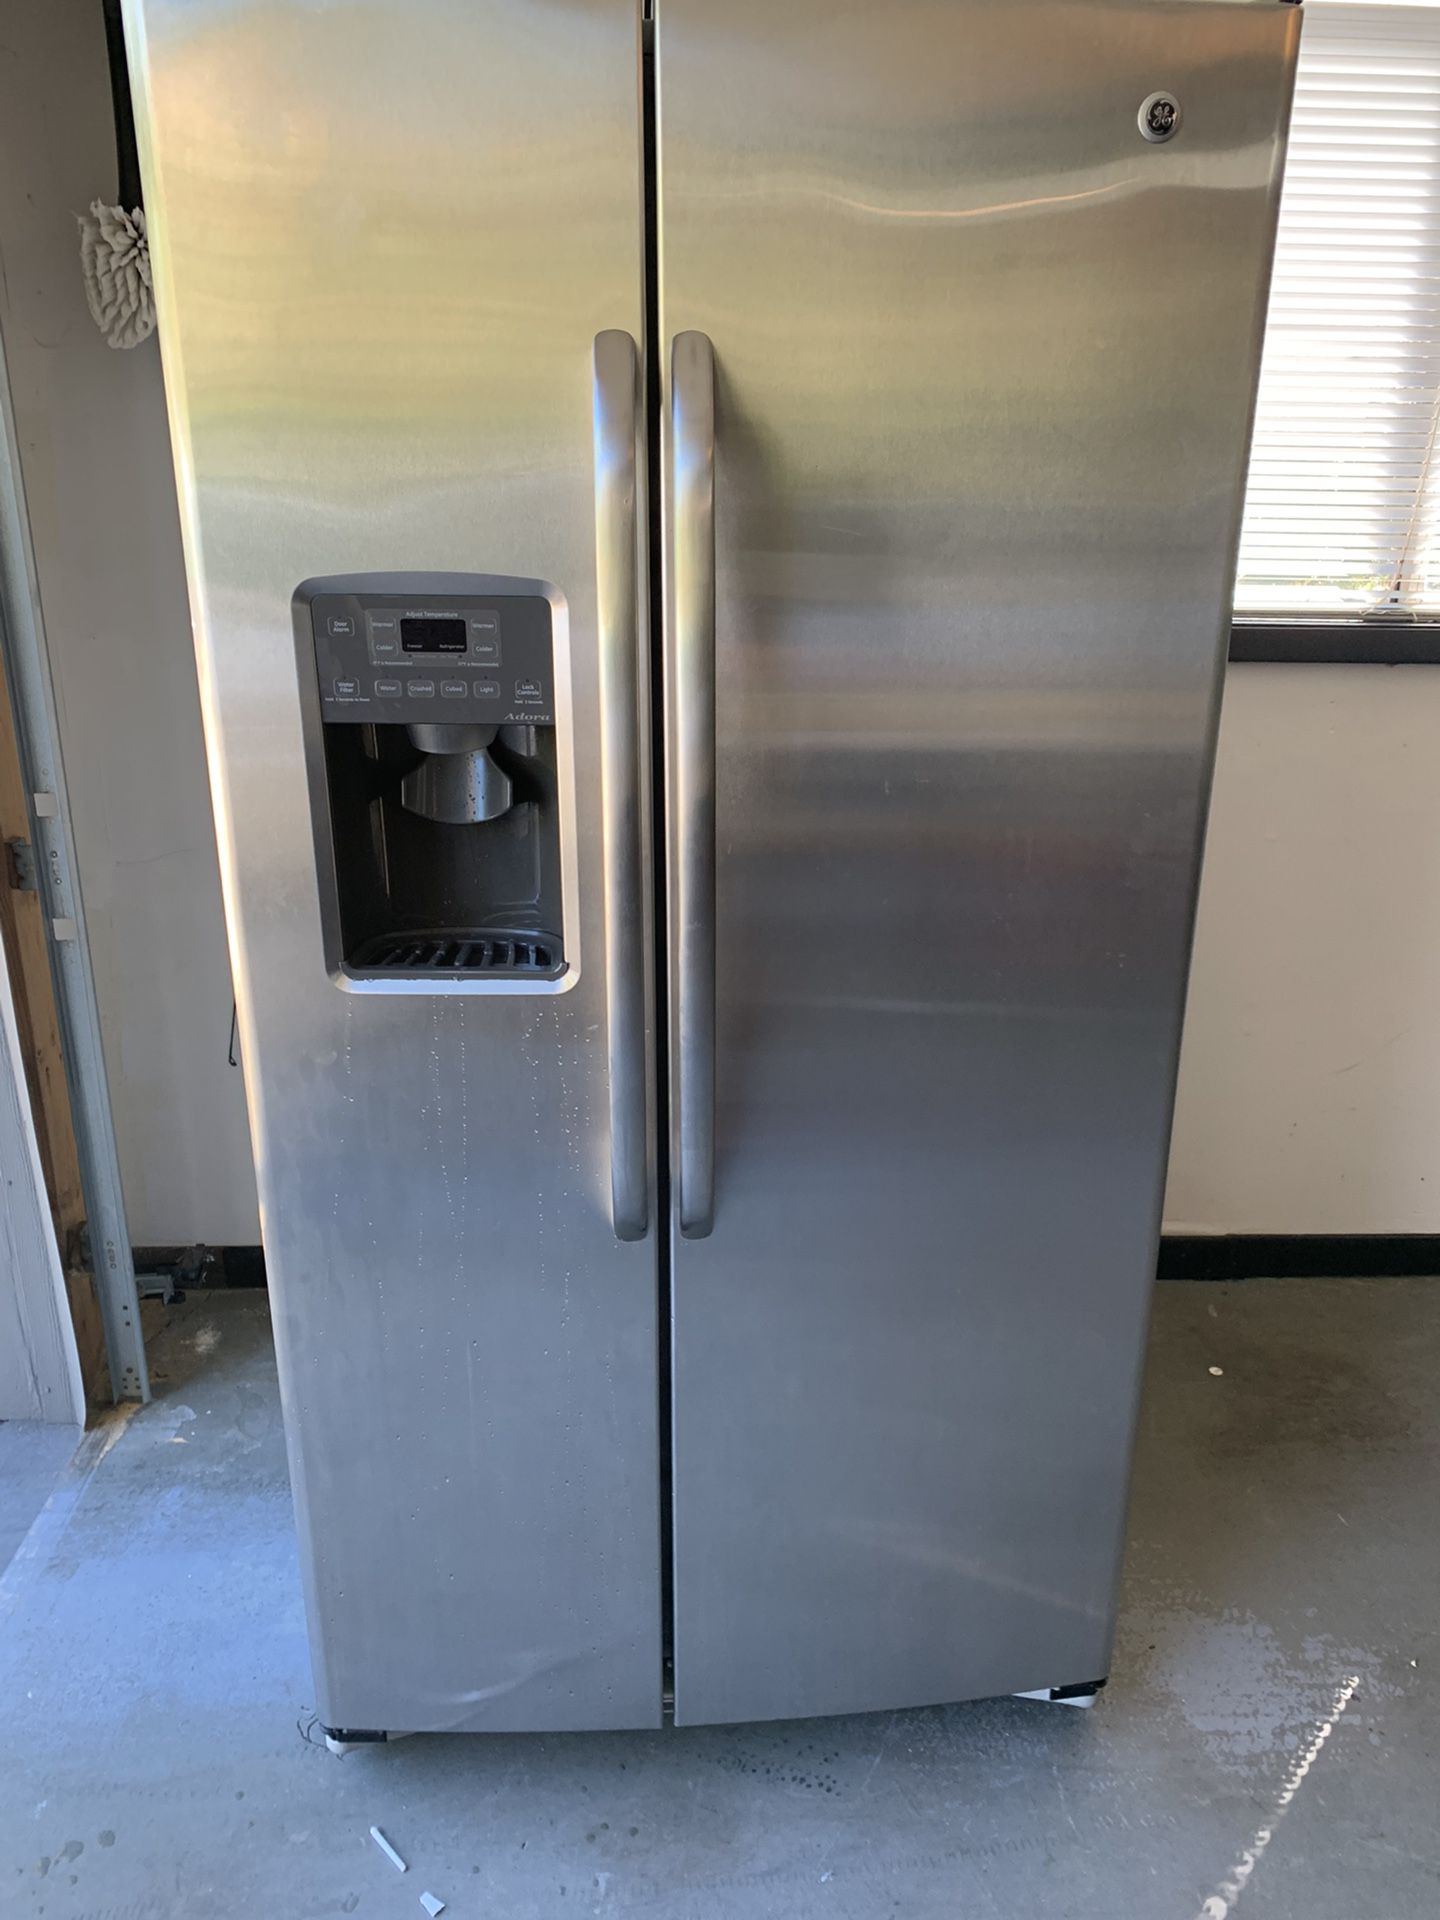 GE Refridgerator … Does Not Get Colder Than 48 (fridge) And 11 (freezer)